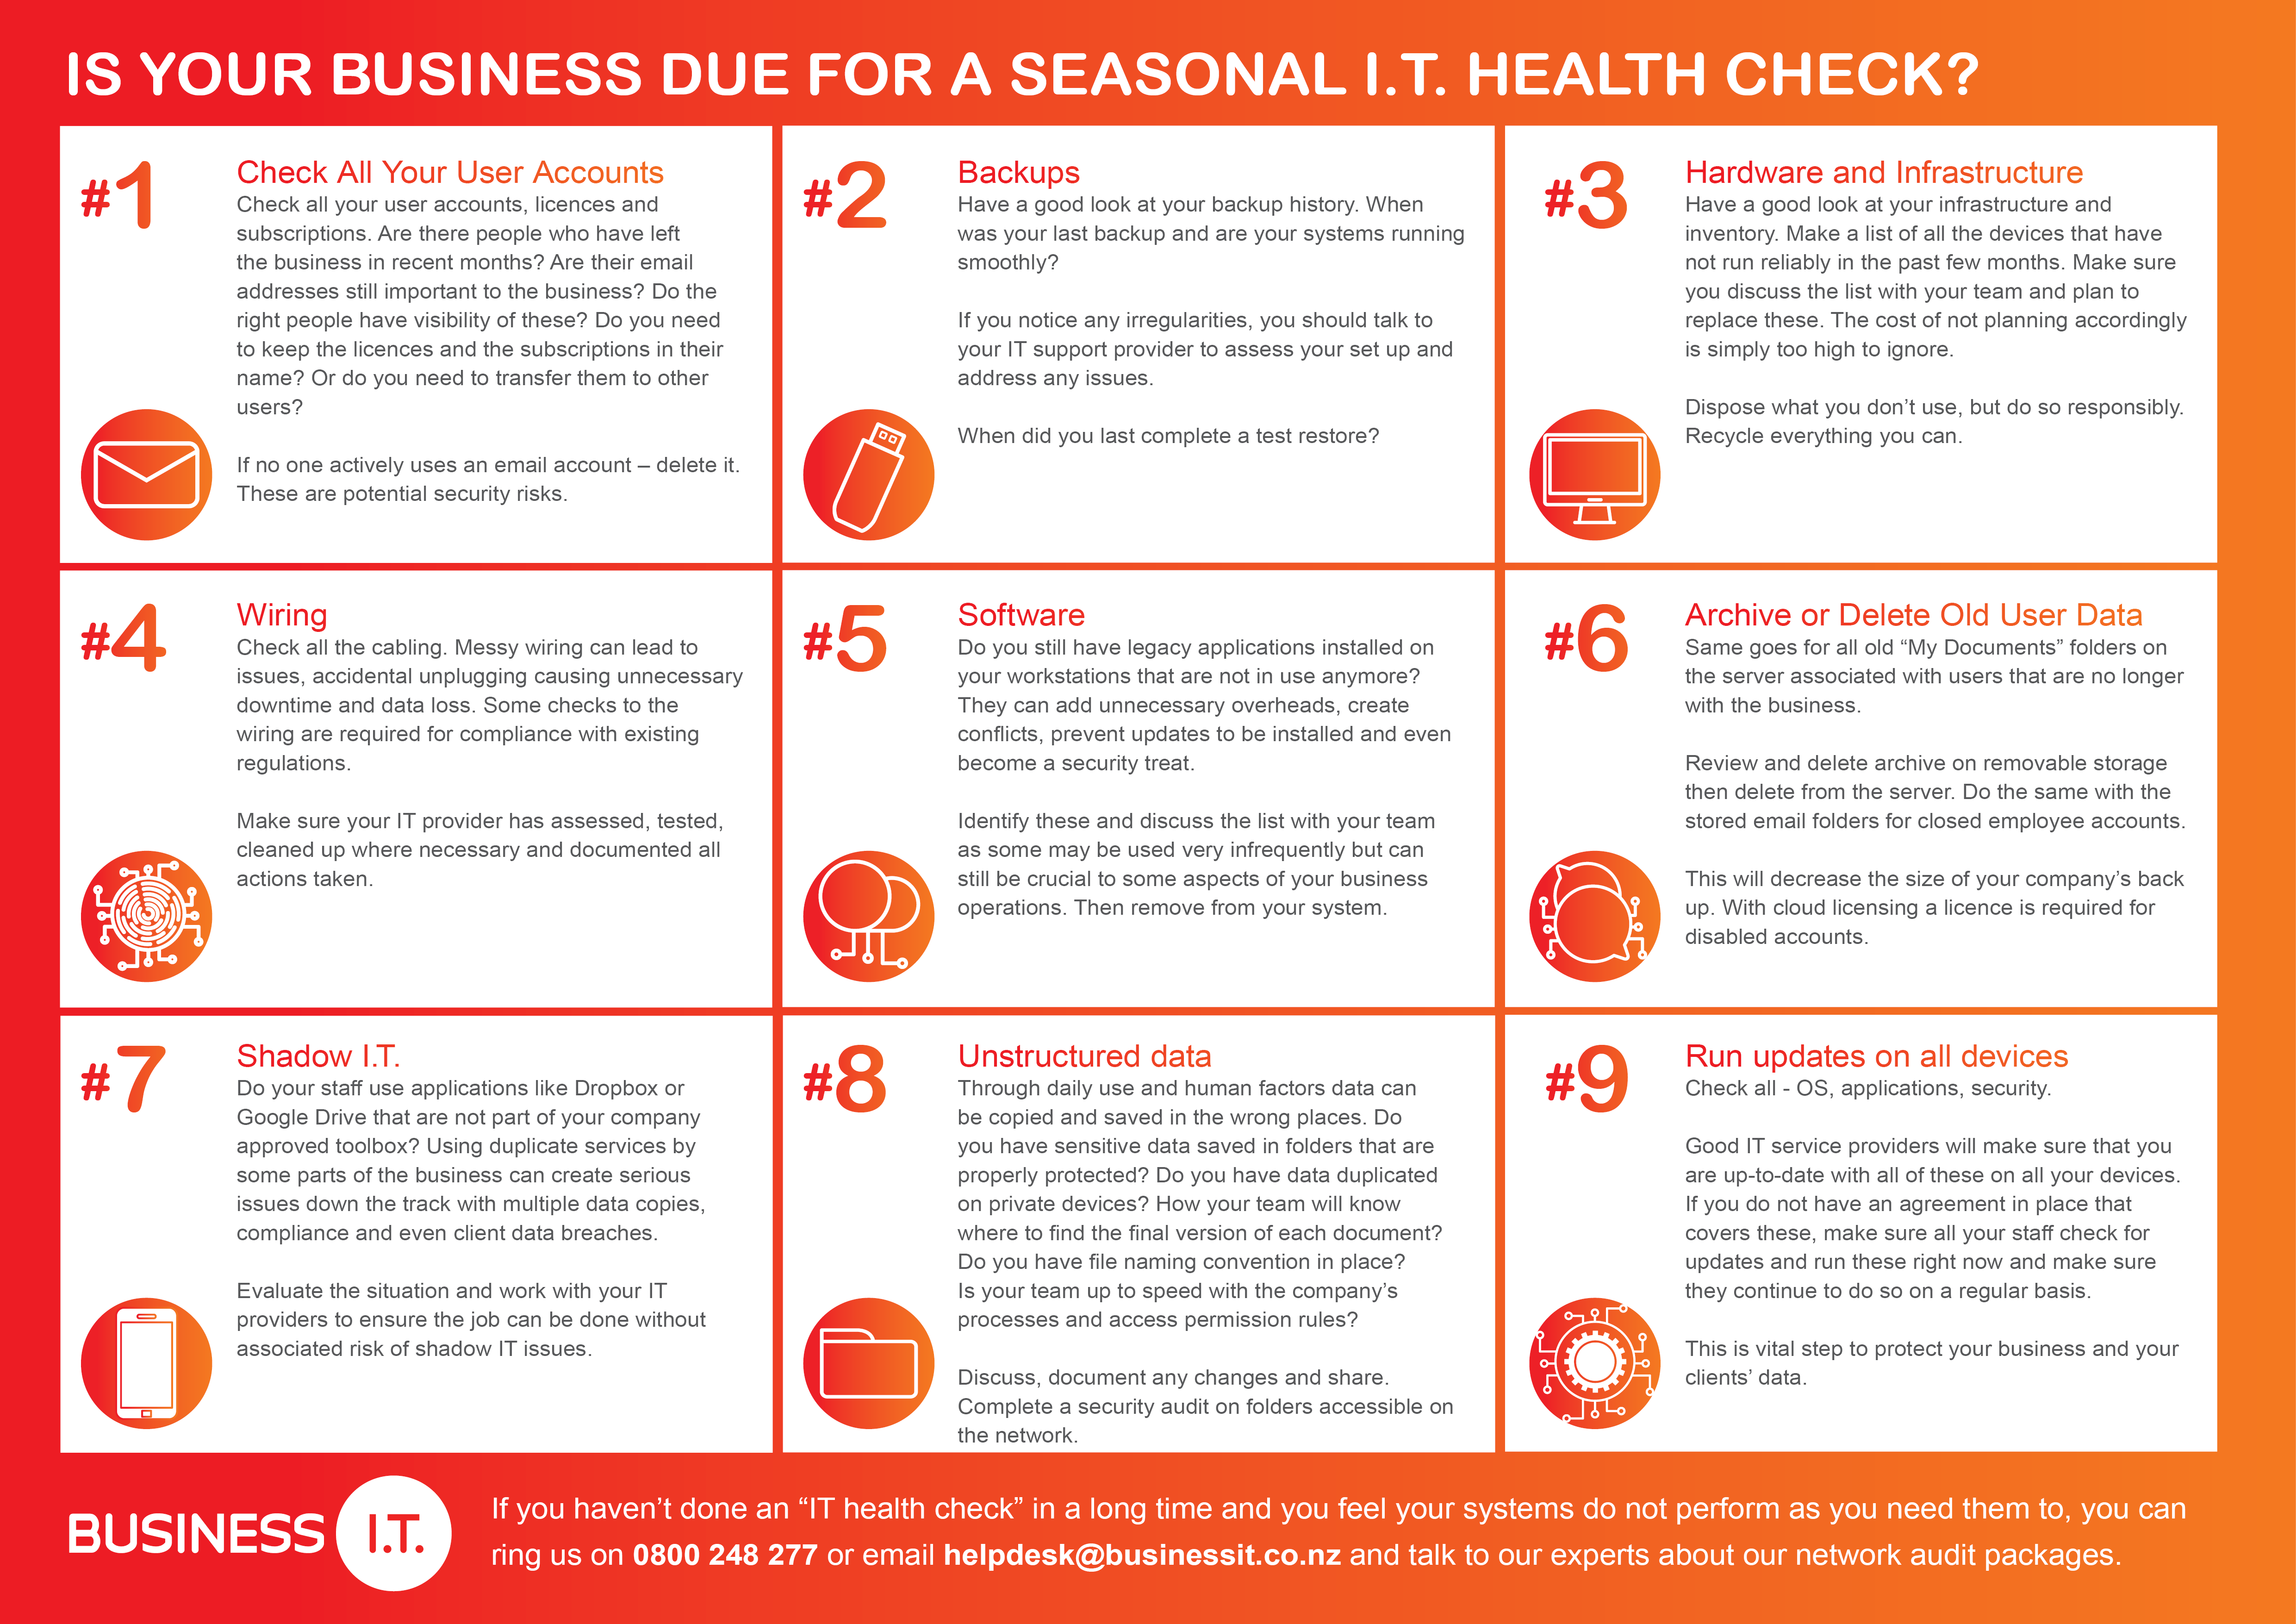 Business IT Tips for Seasonal IT Health Checks